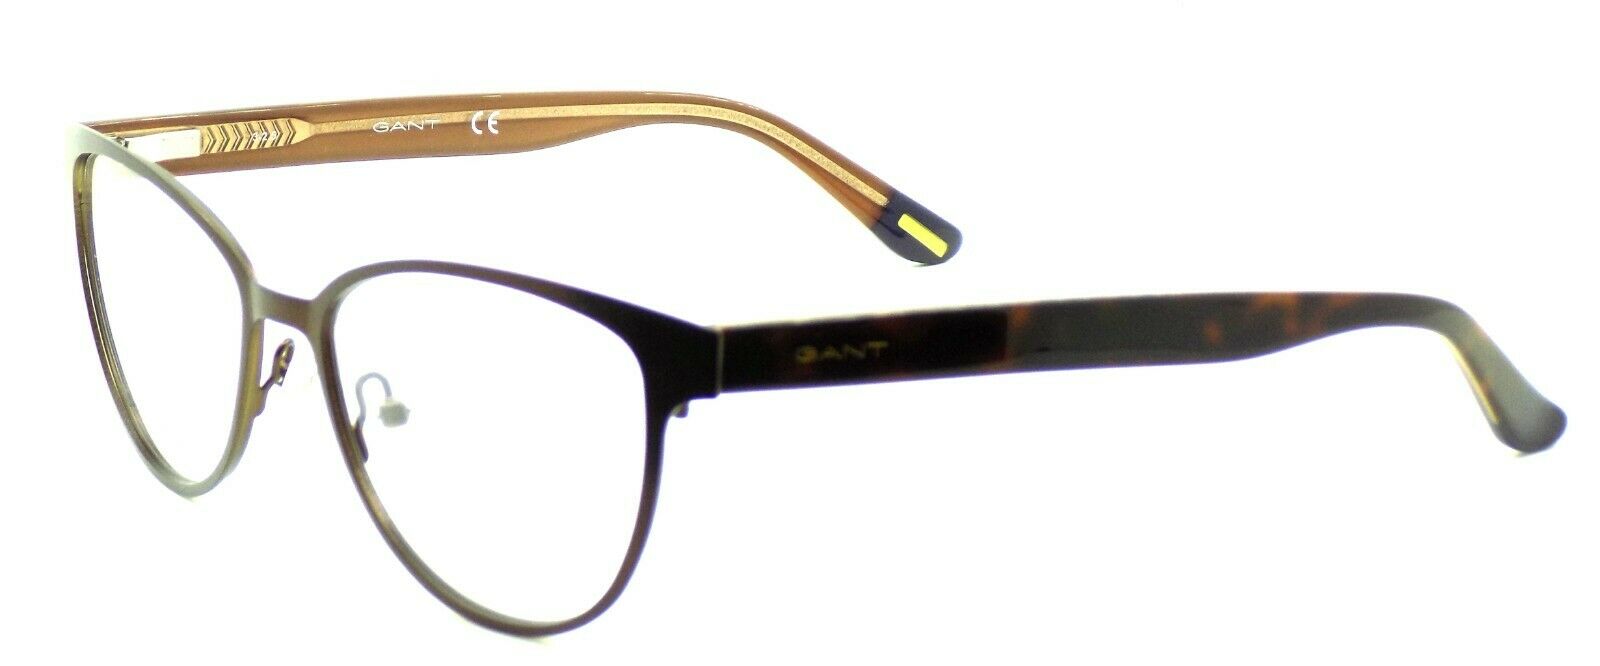 1-GANT GA4055 049 Women's Eyeglasses Frames 51-16-135 Matte Dark Brown + CASE-664689746552-IKSpecs